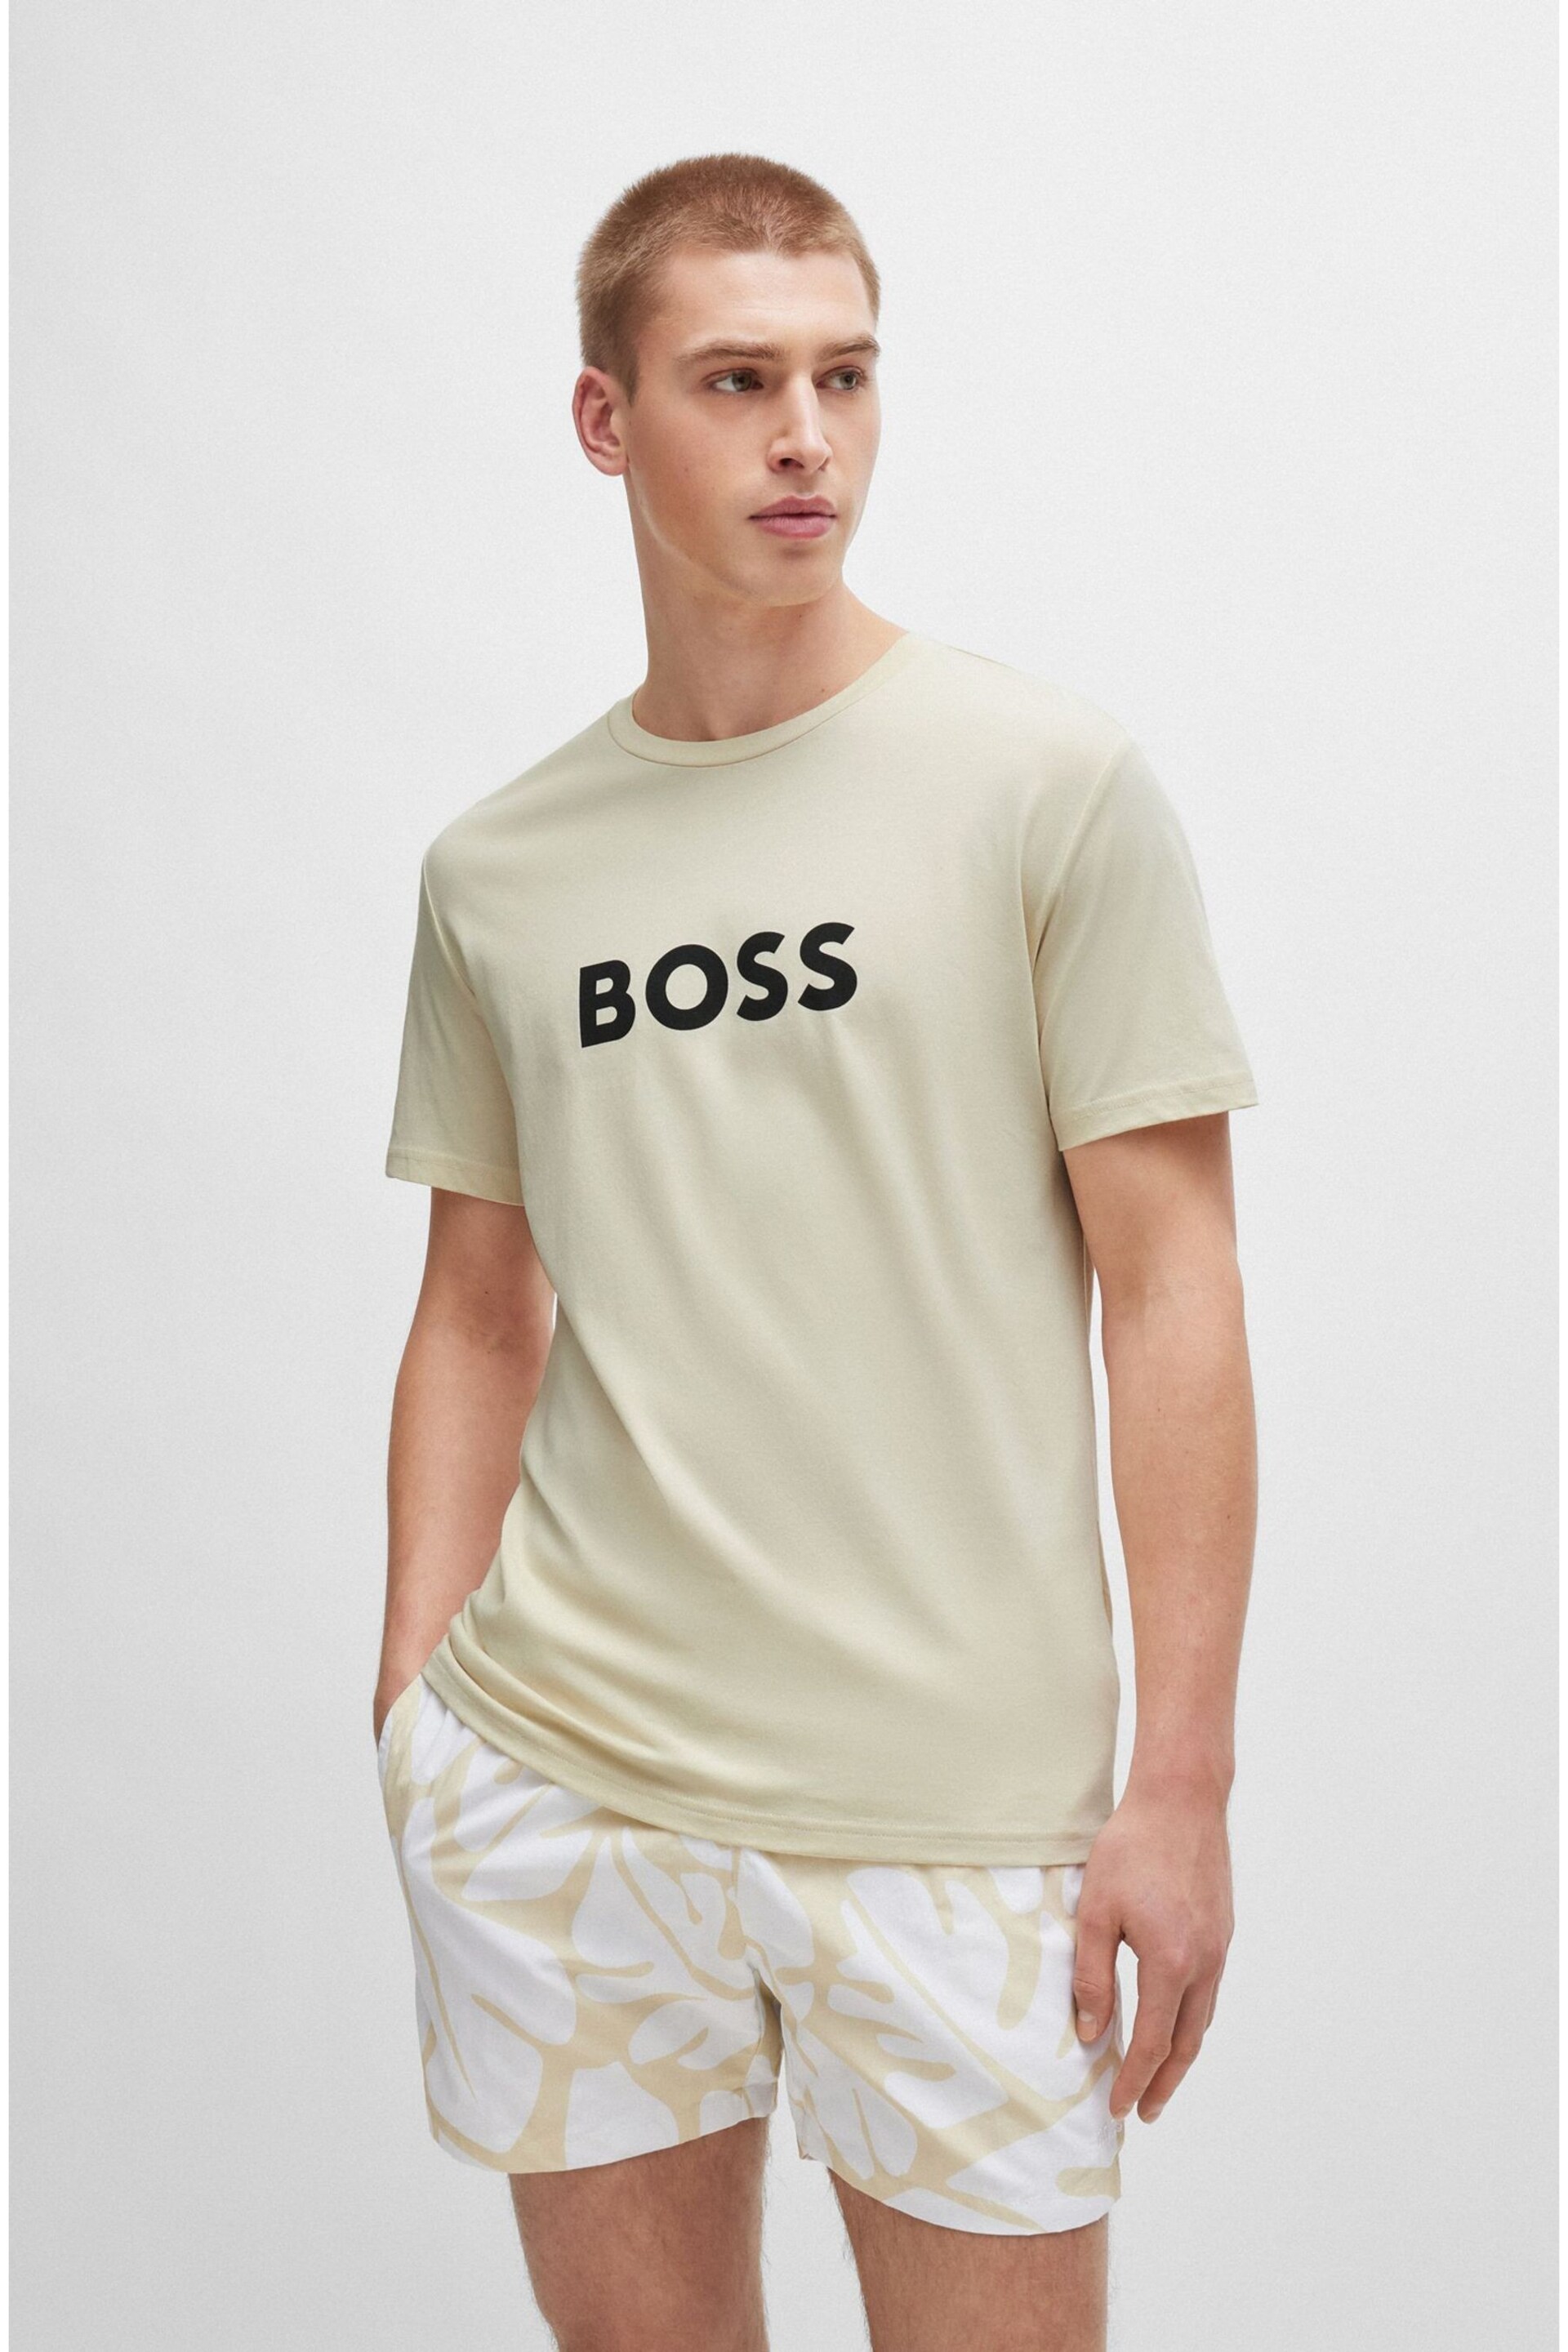 BOSS Beige Large Chest Logo T-Shirt - Image 1 of 3